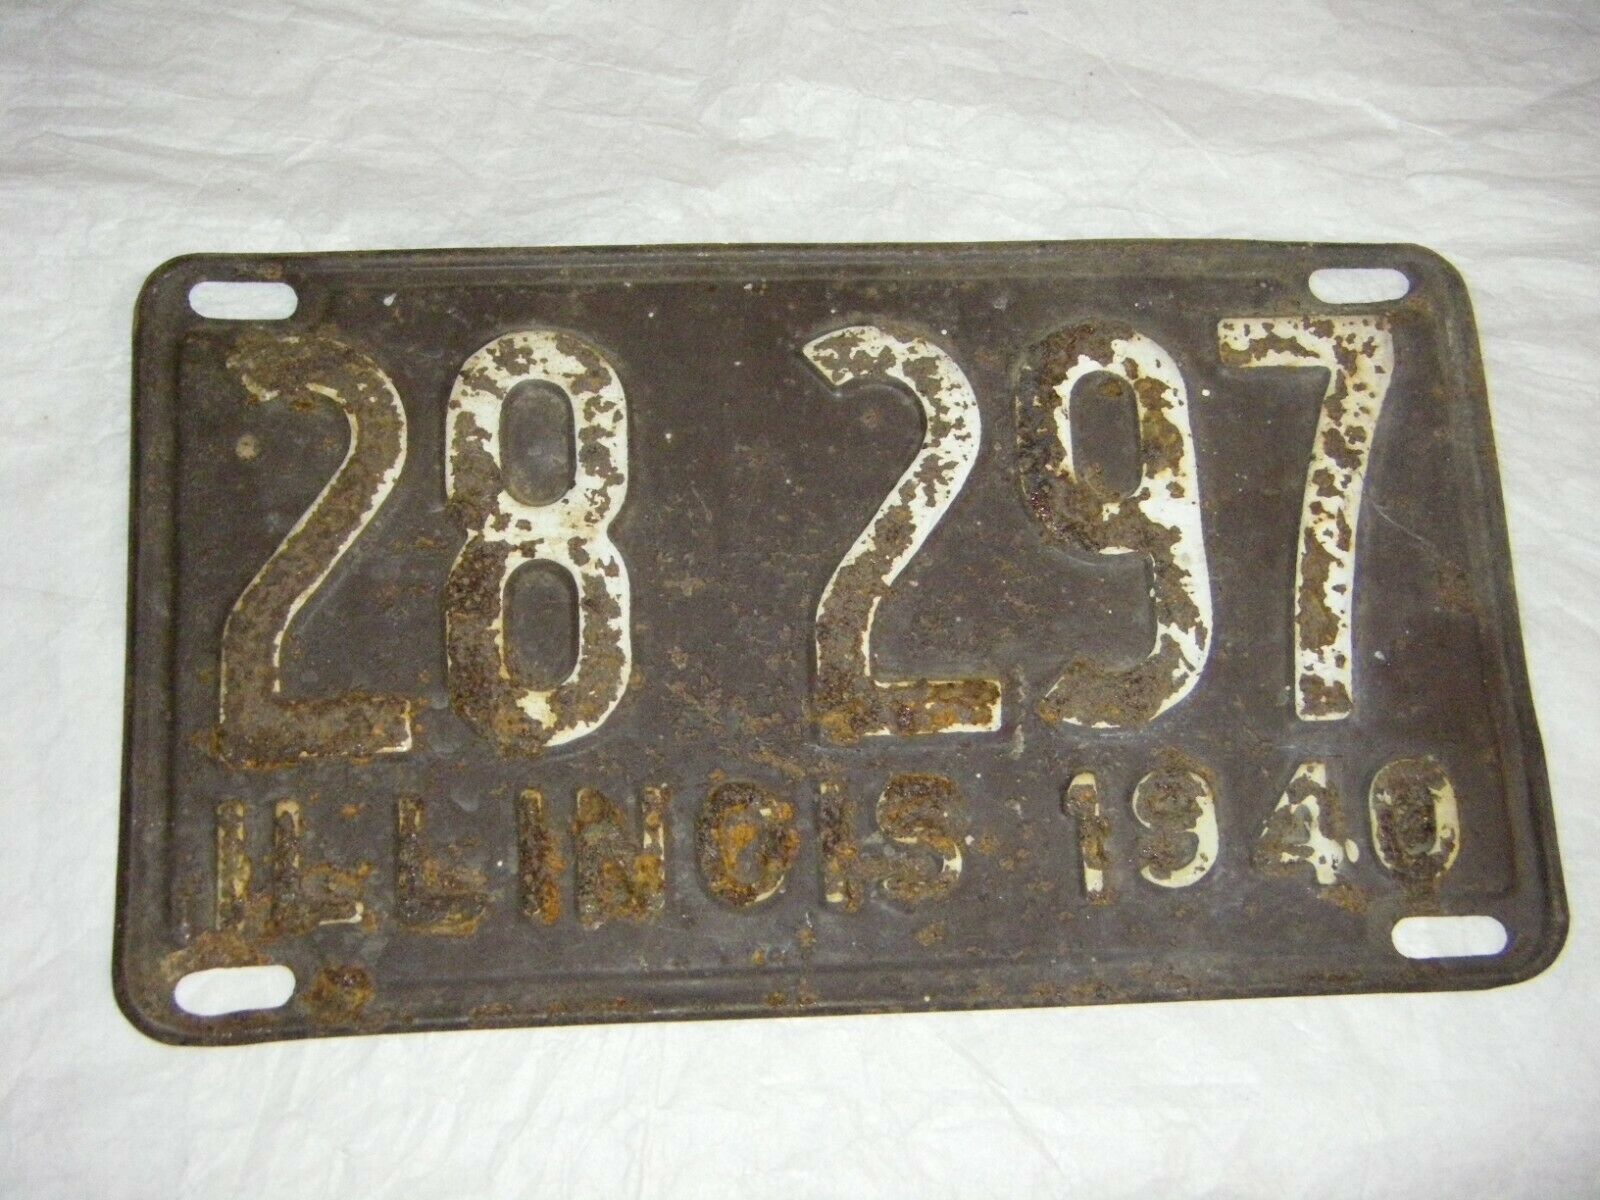 1940 Illinois License Plate #28 297